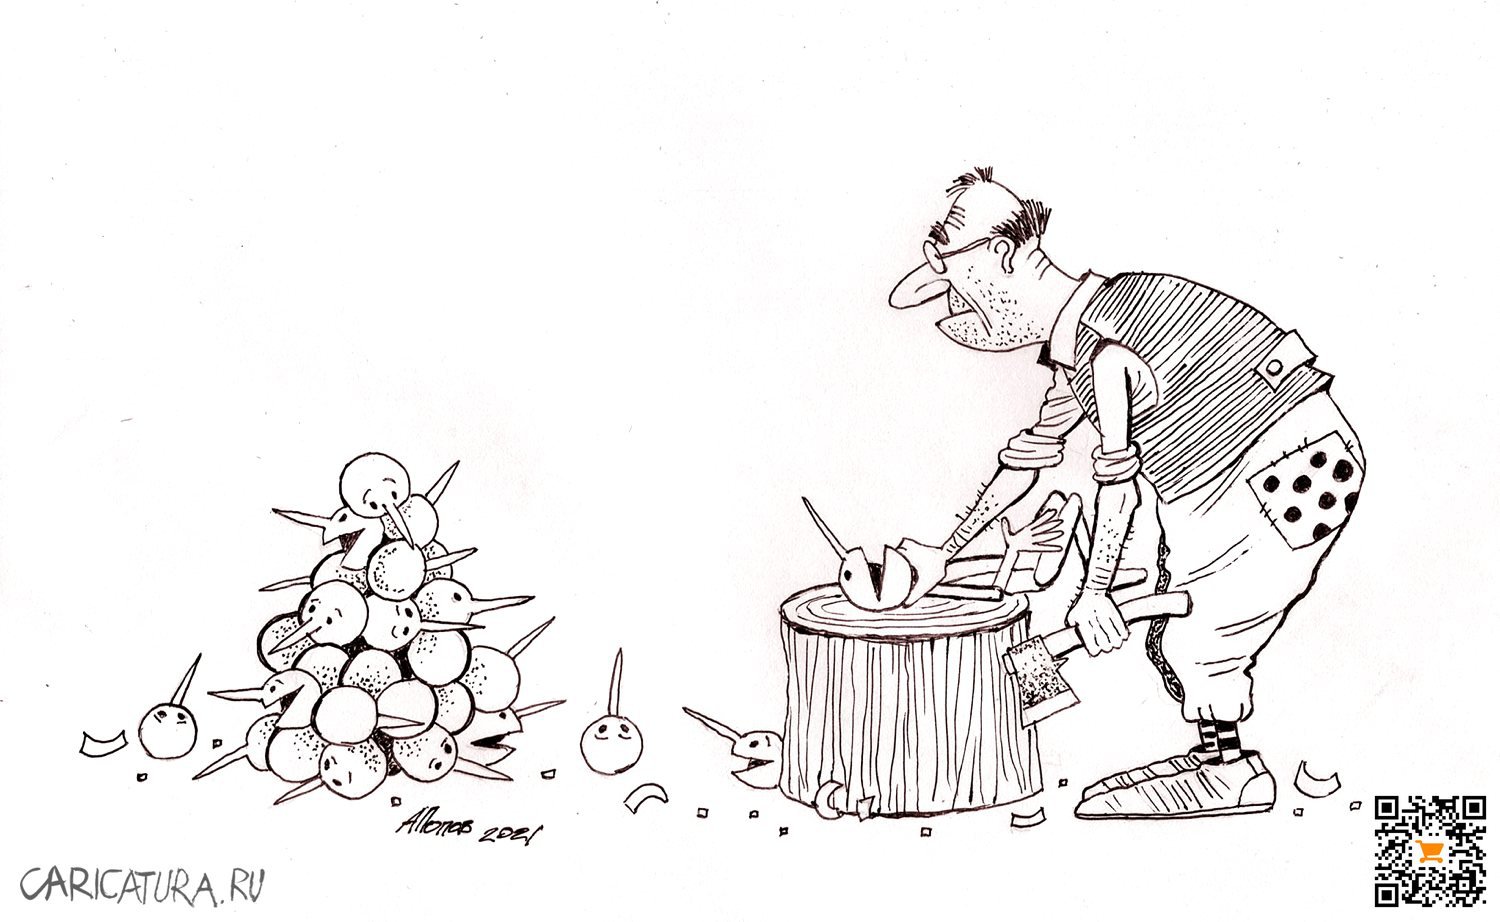 Карикатура "Творческий кризис...", Александр Попов